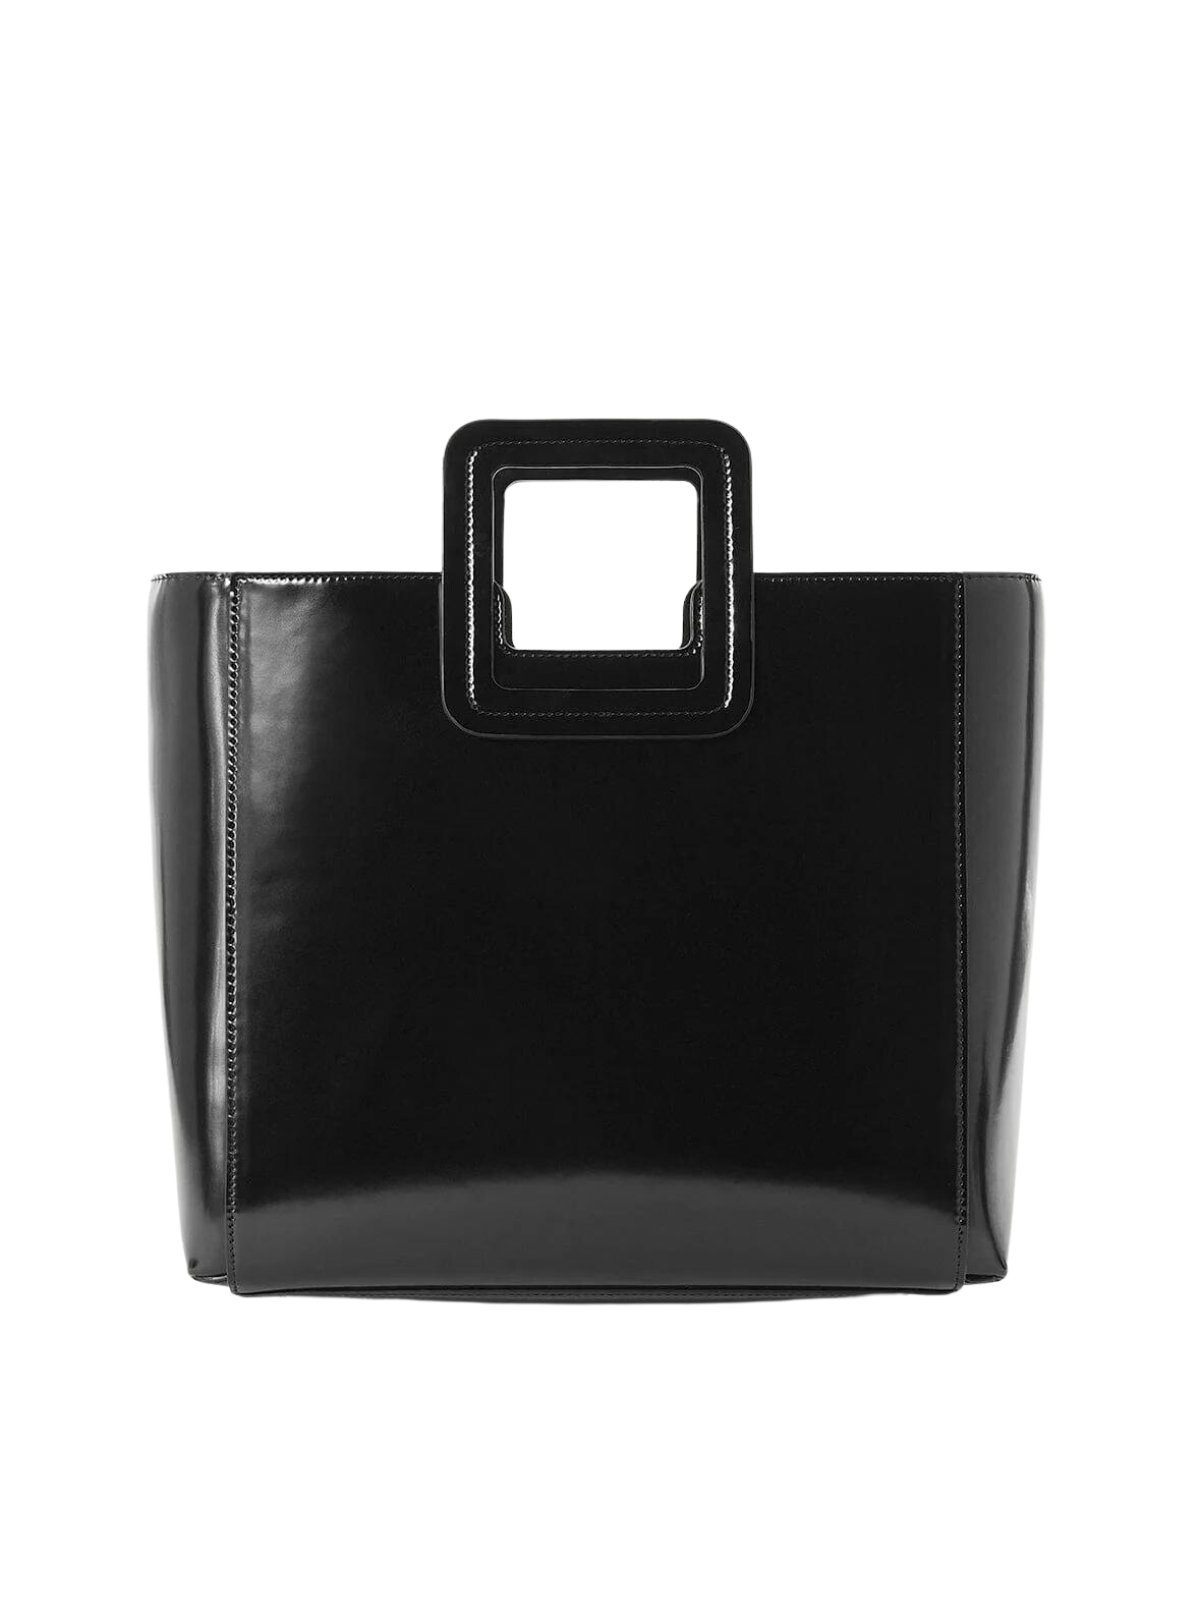 Dolce Vita Keena Convertible Wristlet Bag- Black – Hand In Pocket